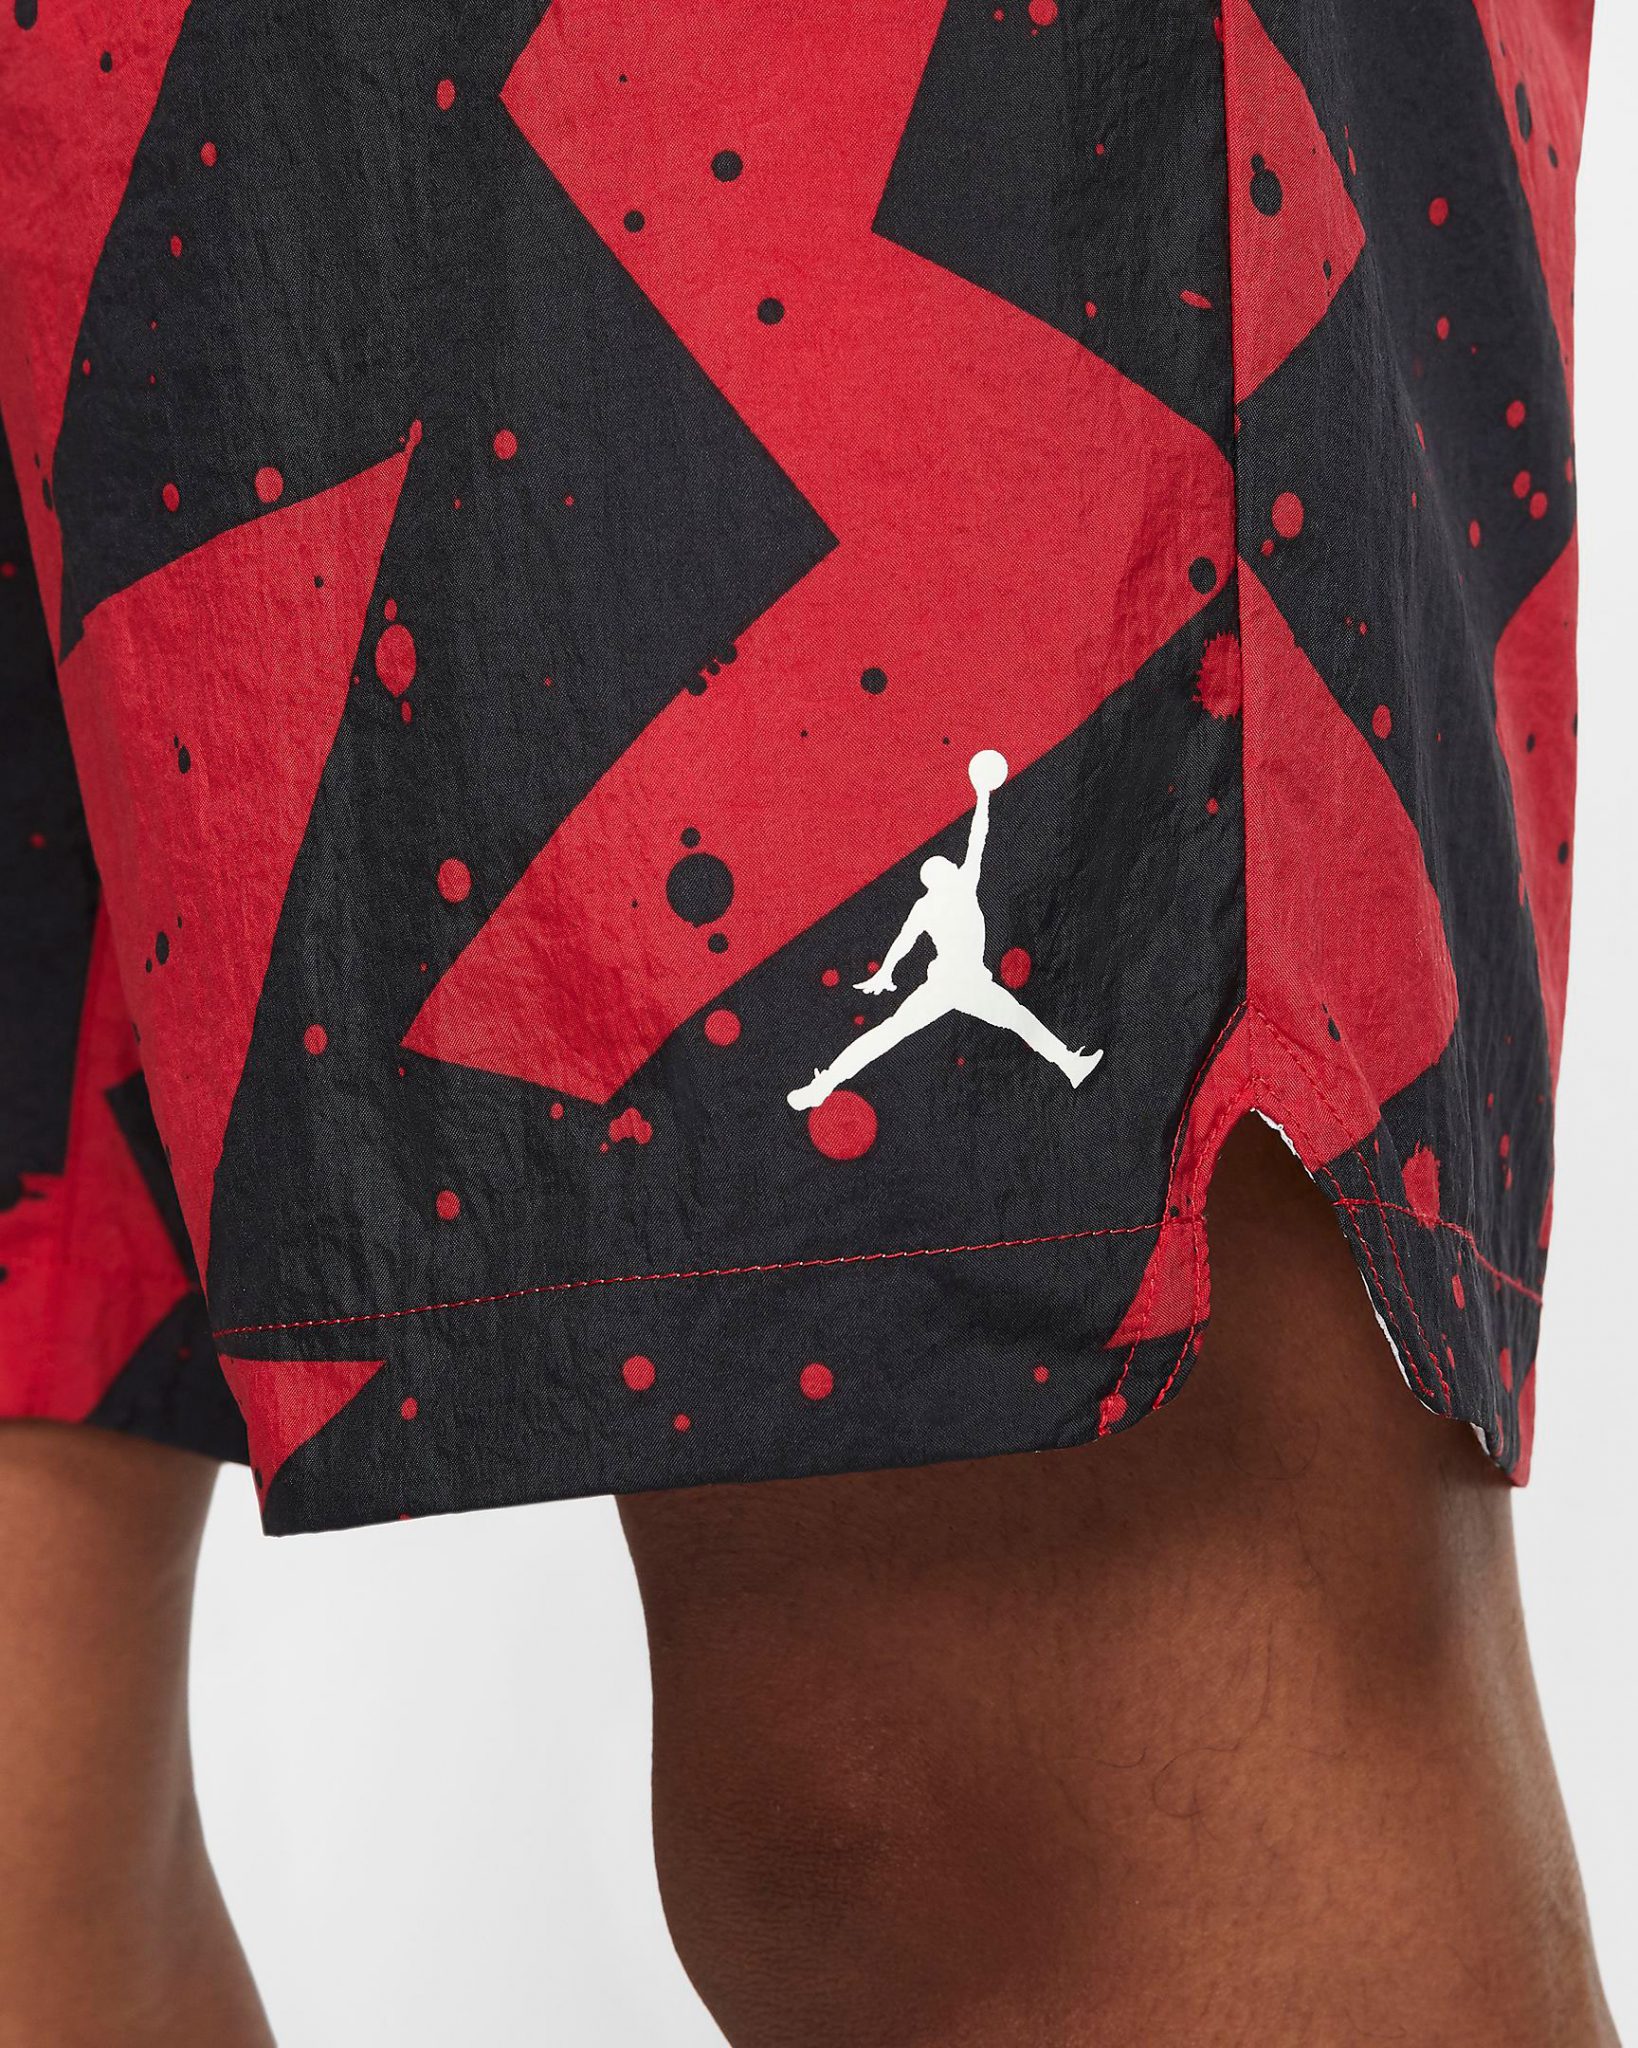 Air Jordan 4 Red Metallic Clothing Match | SneakerFits.com